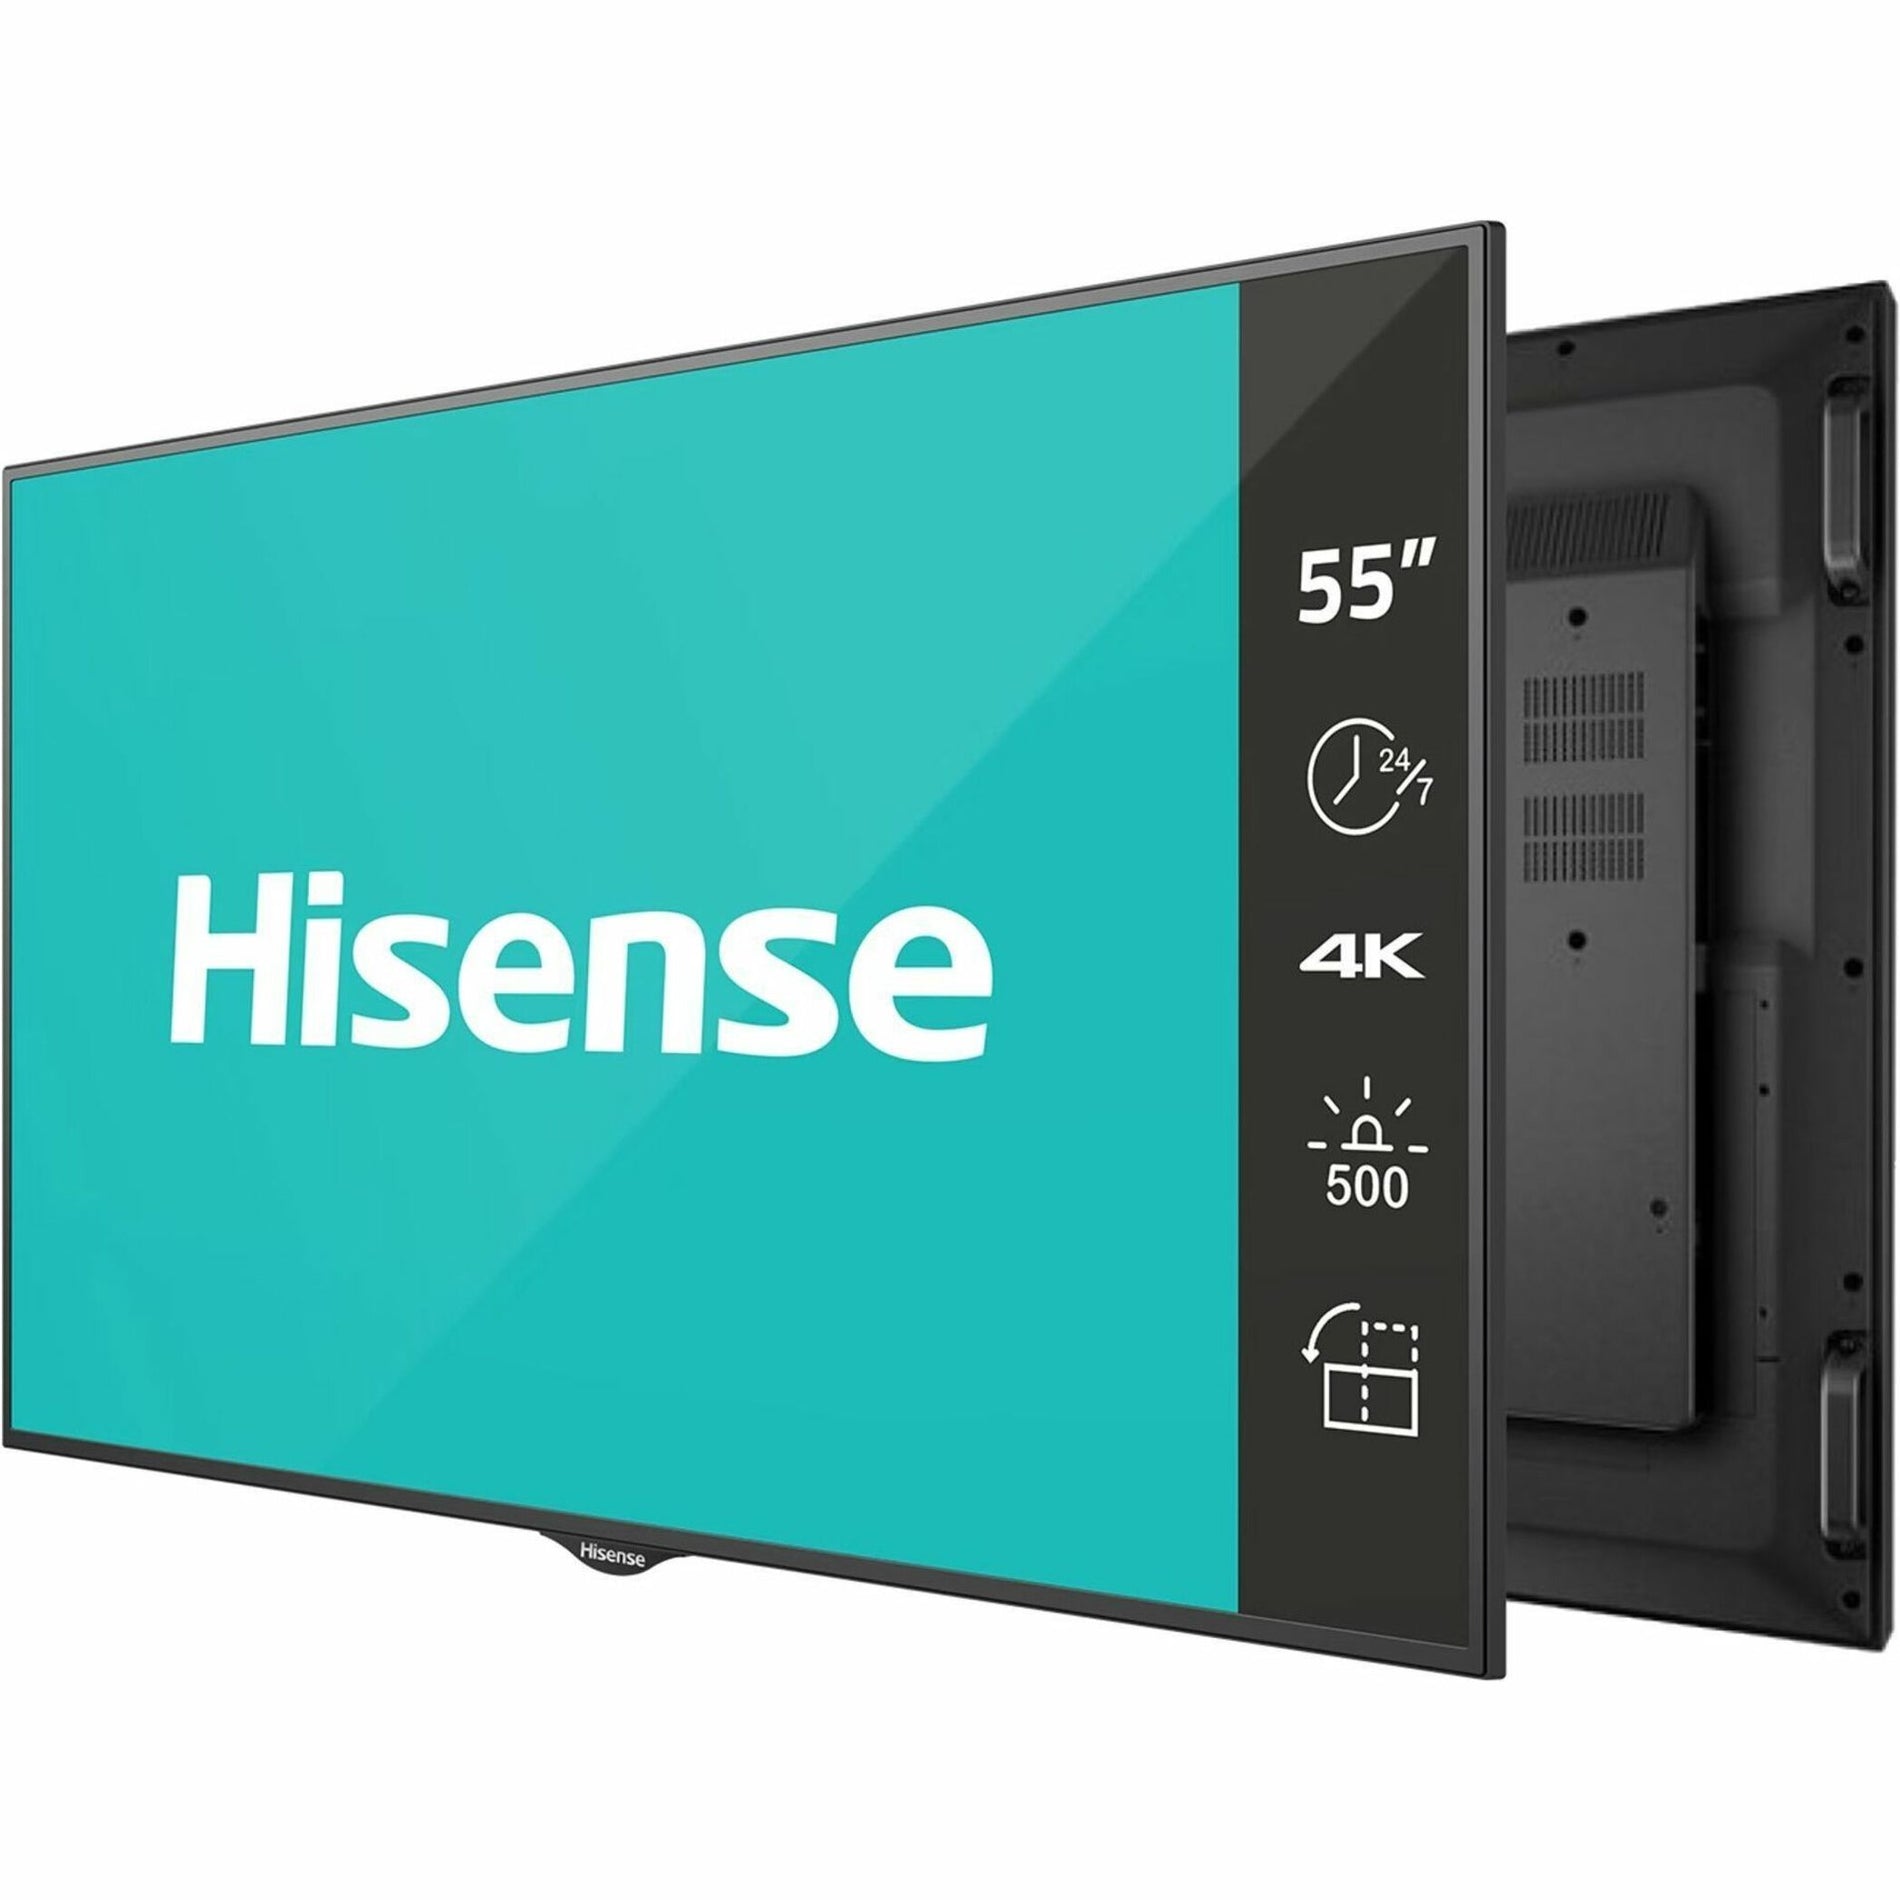 Hisense 55BM66AE 55" 4K UHD Digital Signage Display - 24/7 Operation, Android 9.0 Pie, 500 Nit Brightness, 72% Color Gamut